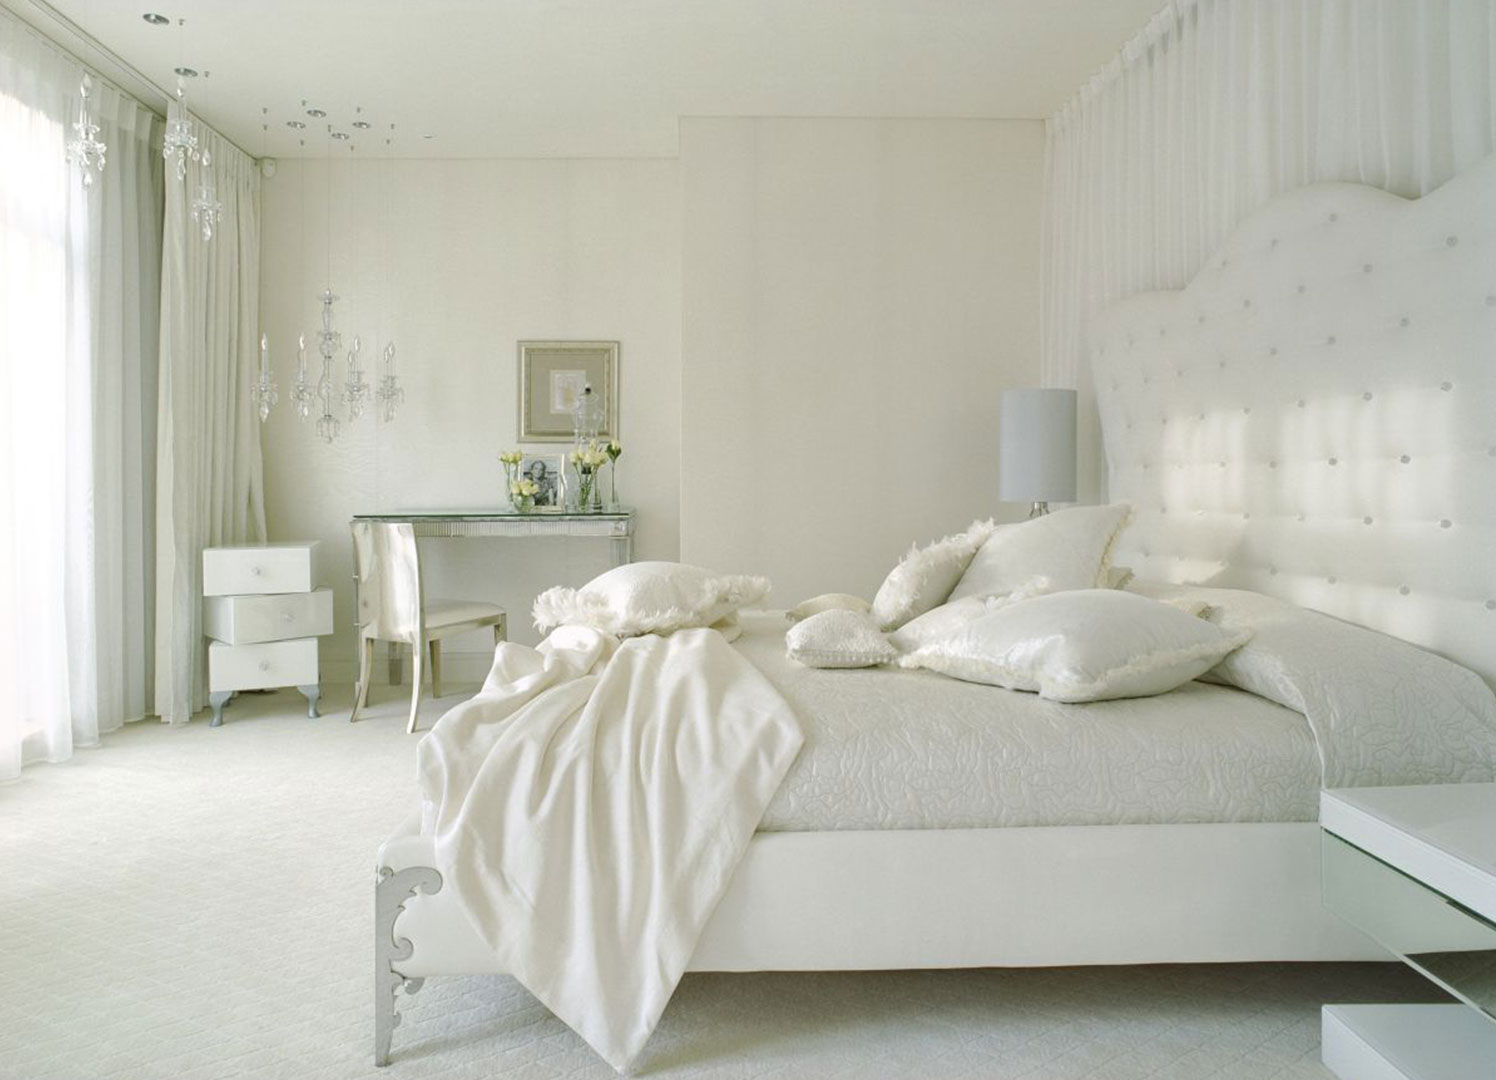 White Bedroom Decorating Ideas Pinterest